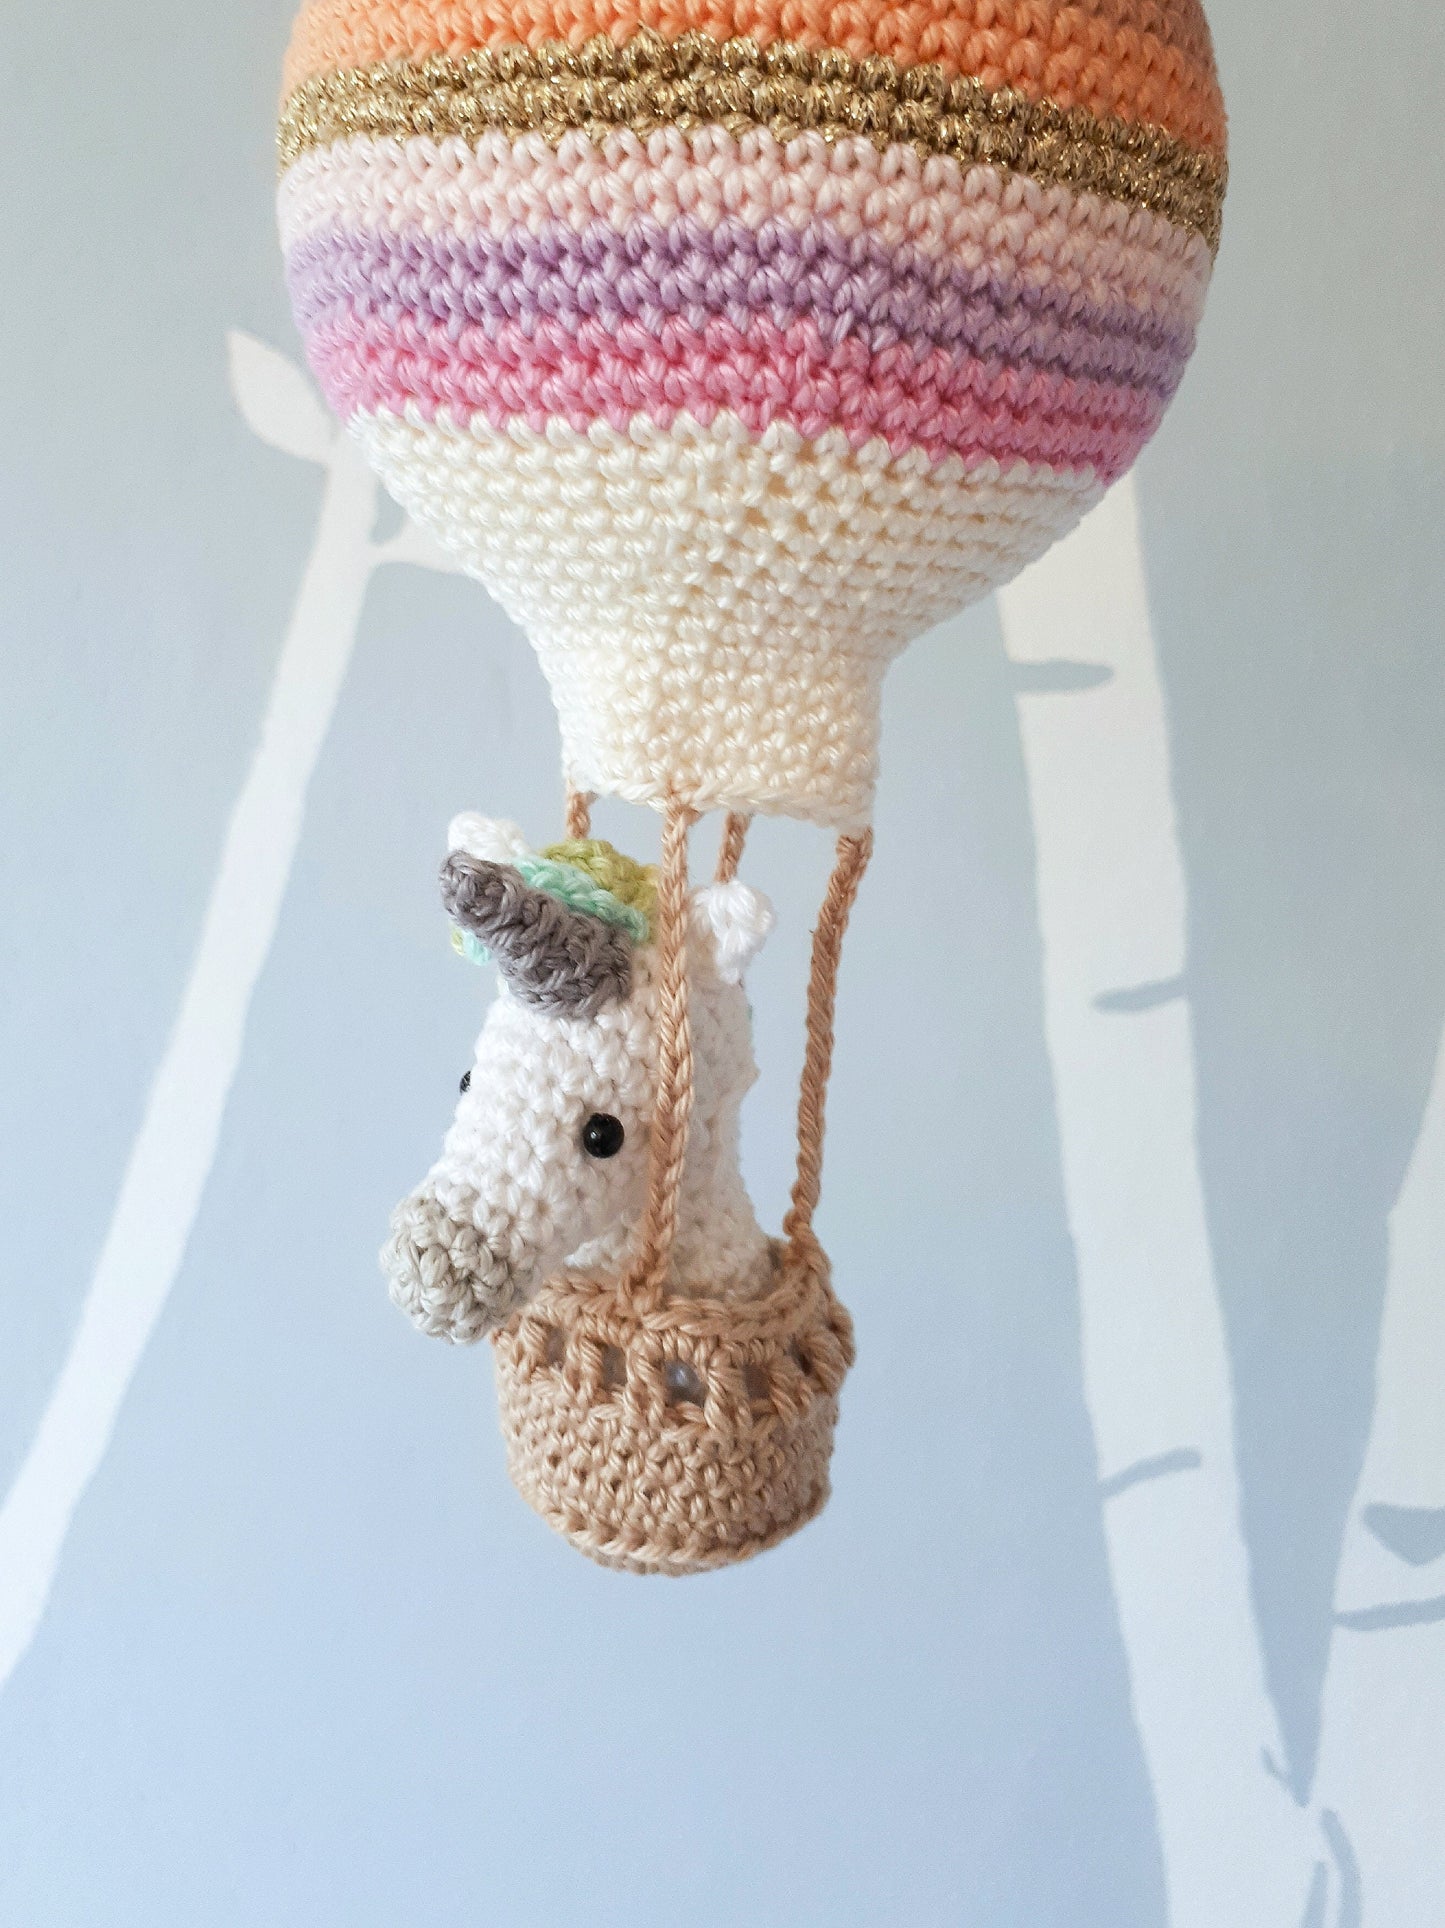 Crochet pattern amigurumi unicorn in a hot air balloon